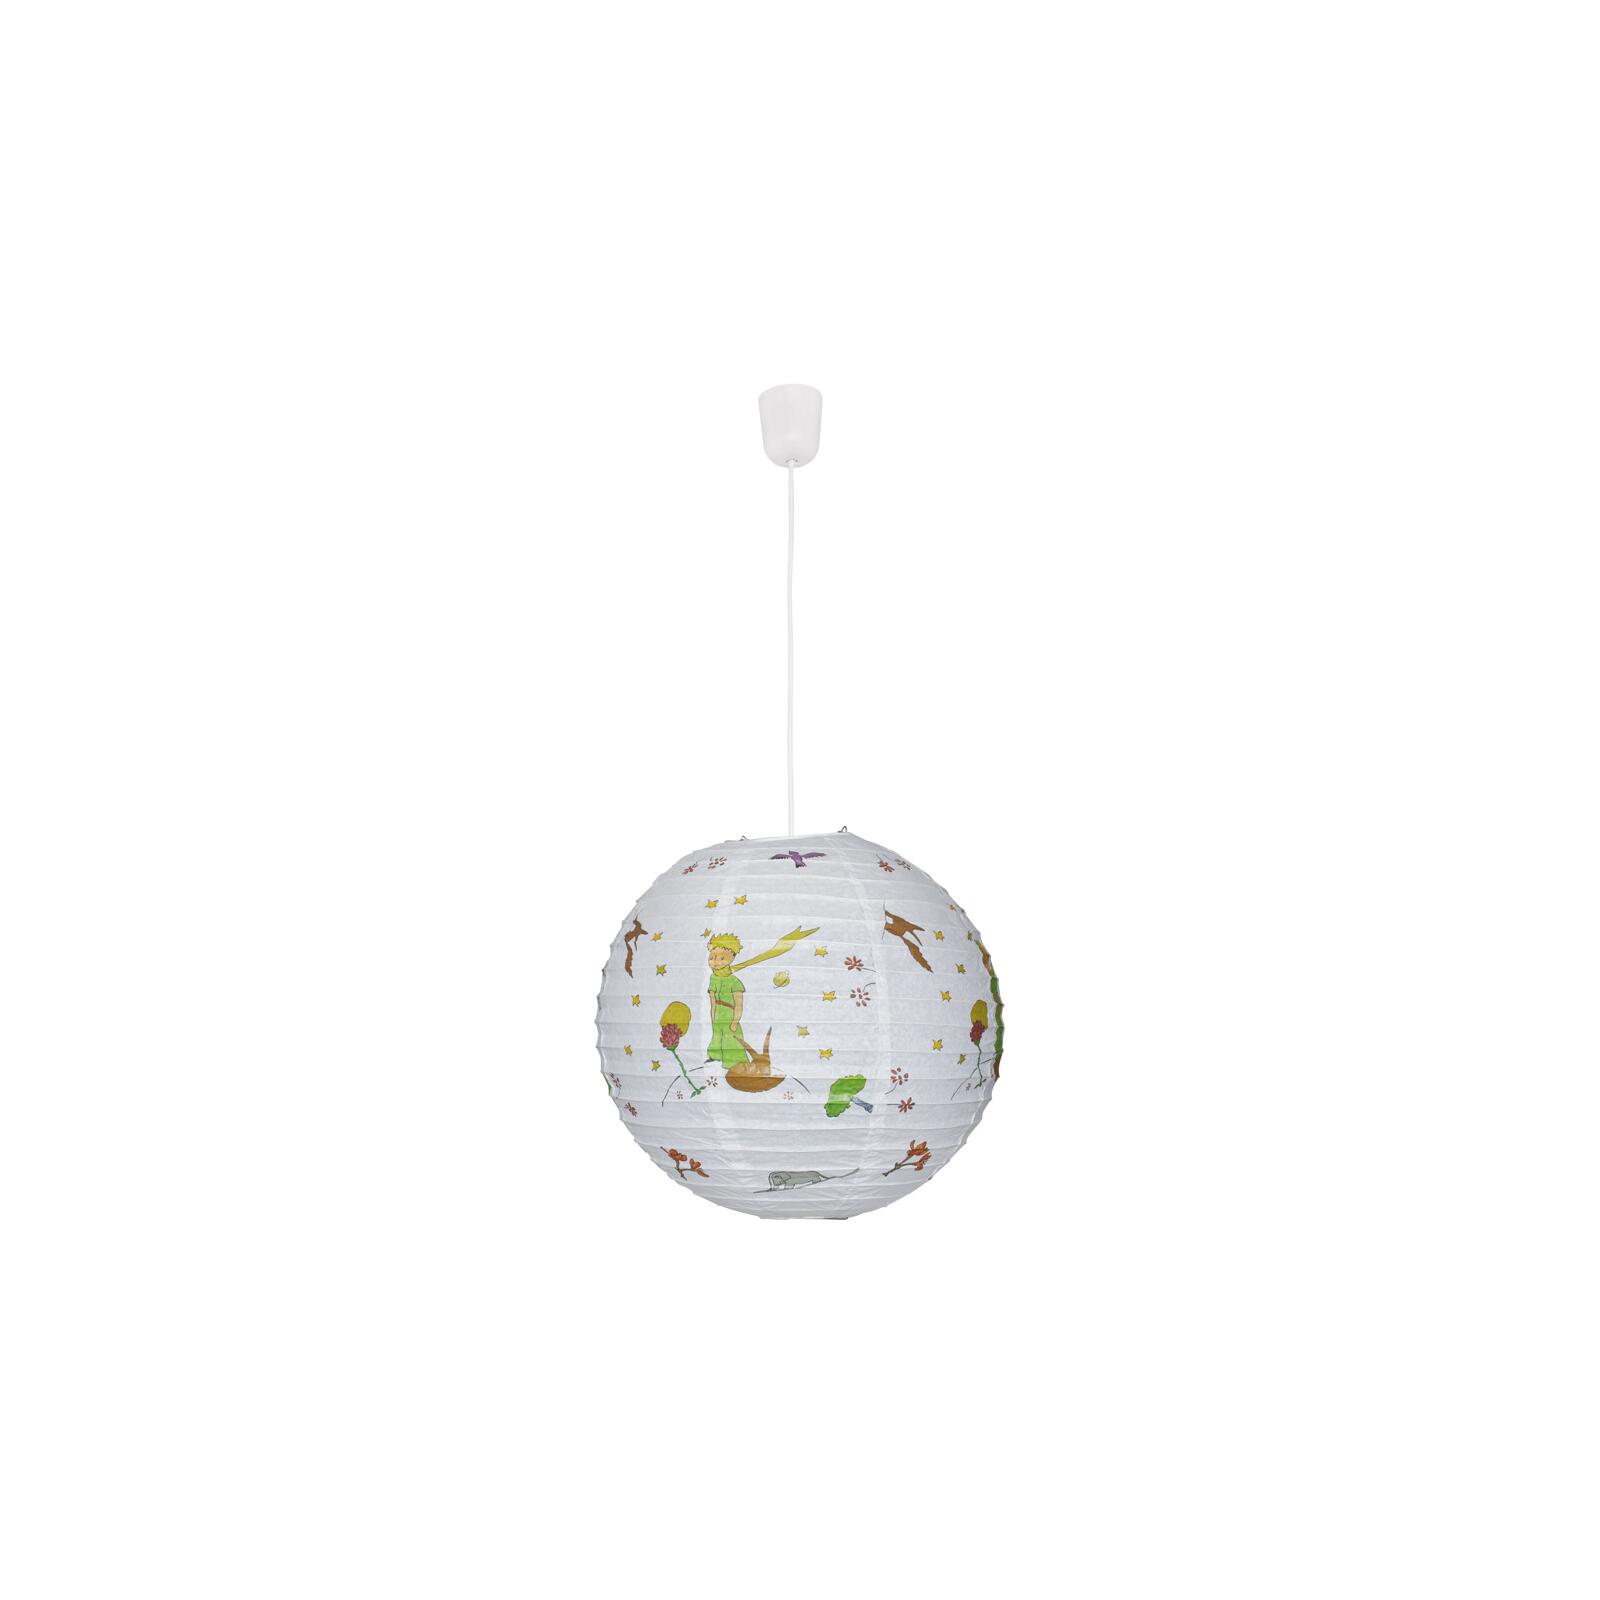 Pendelleuchte Papierballon Prinz & Leuchten Lampen - Onlineshop